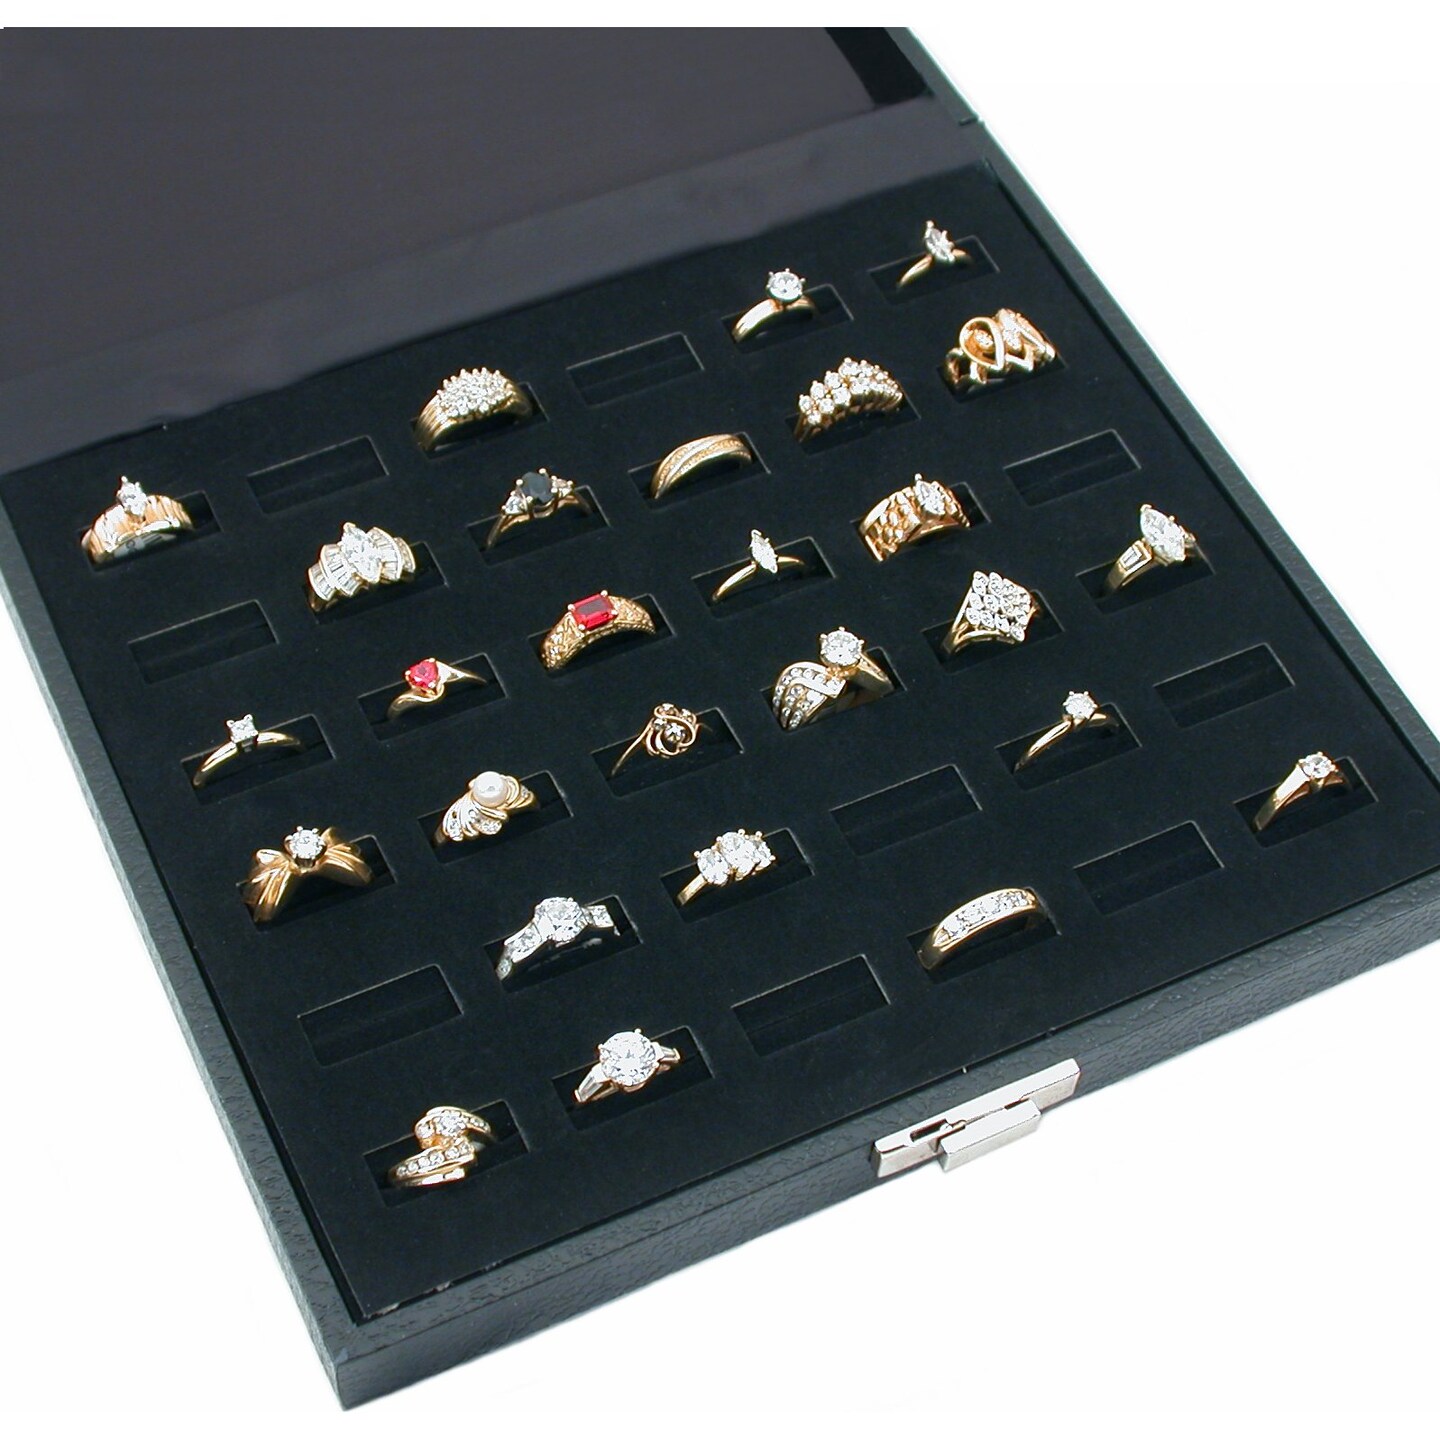 Two Findingking 36 Slot Ring Trays Black Travel Jewelry Showcase Display 2 Pcs